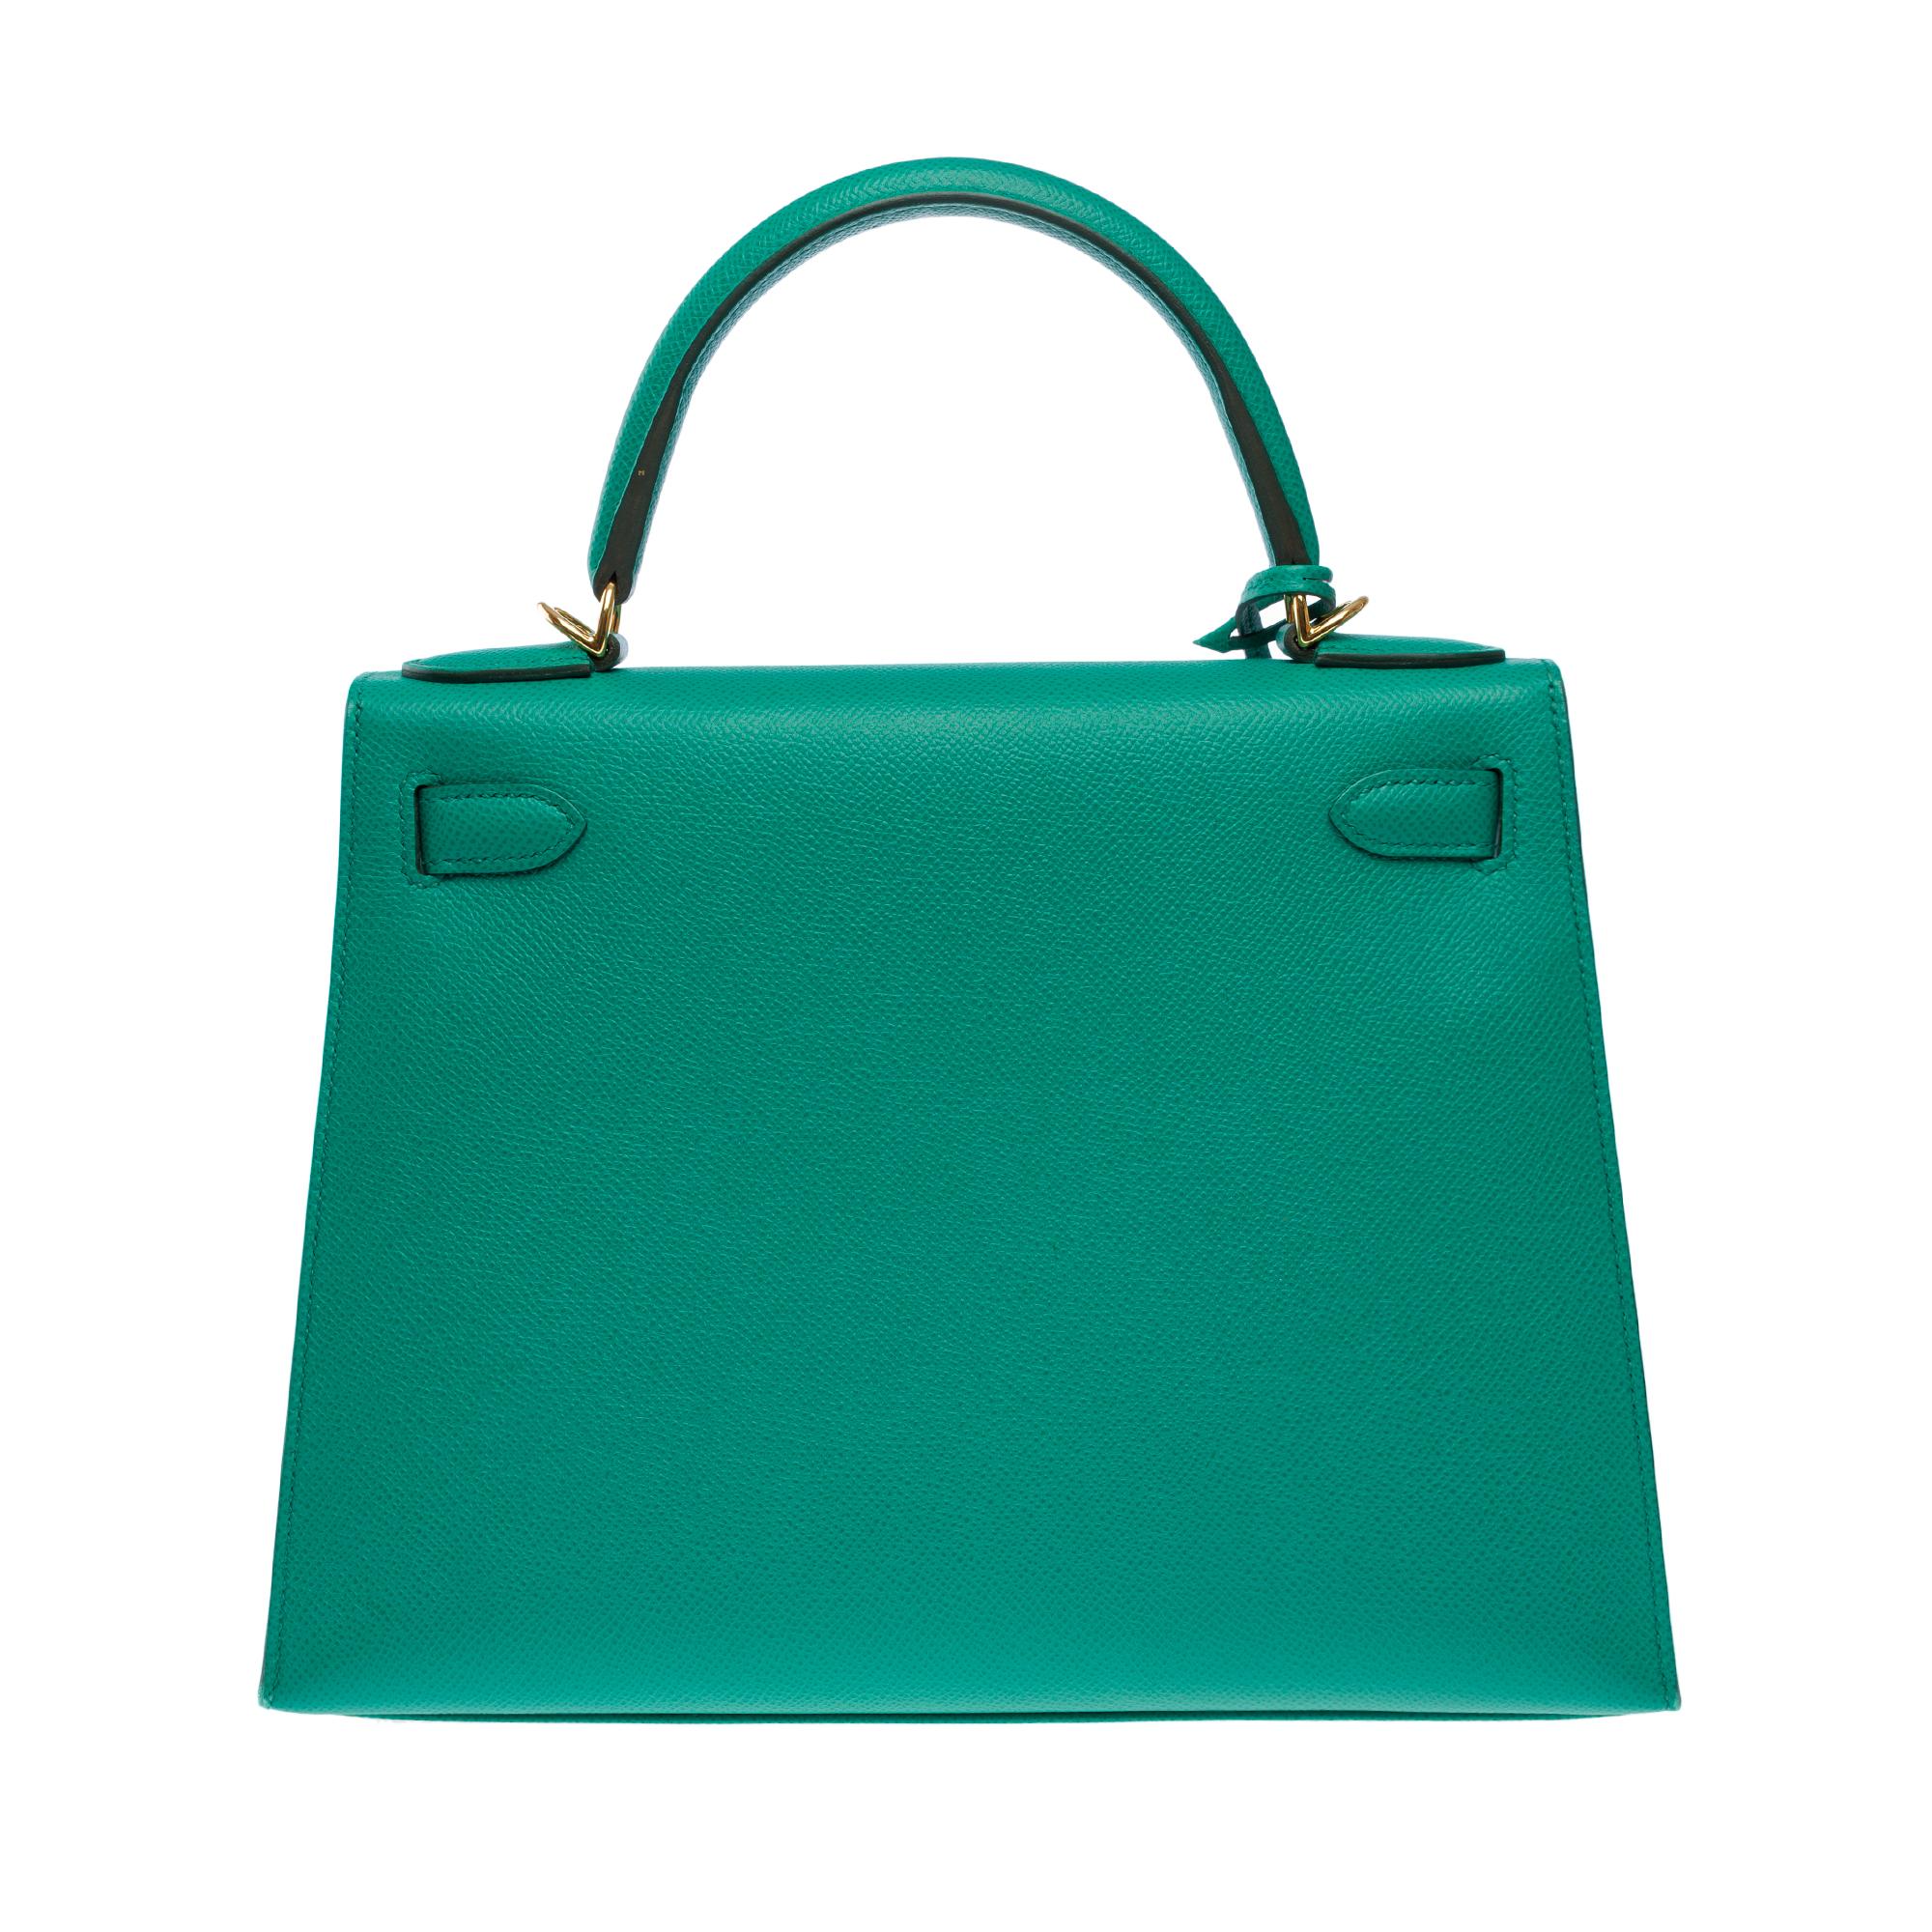 Women's New Hermès Kelly 28 sellier handbag strap in Vert Jade Epsom leather, GHW For Sale